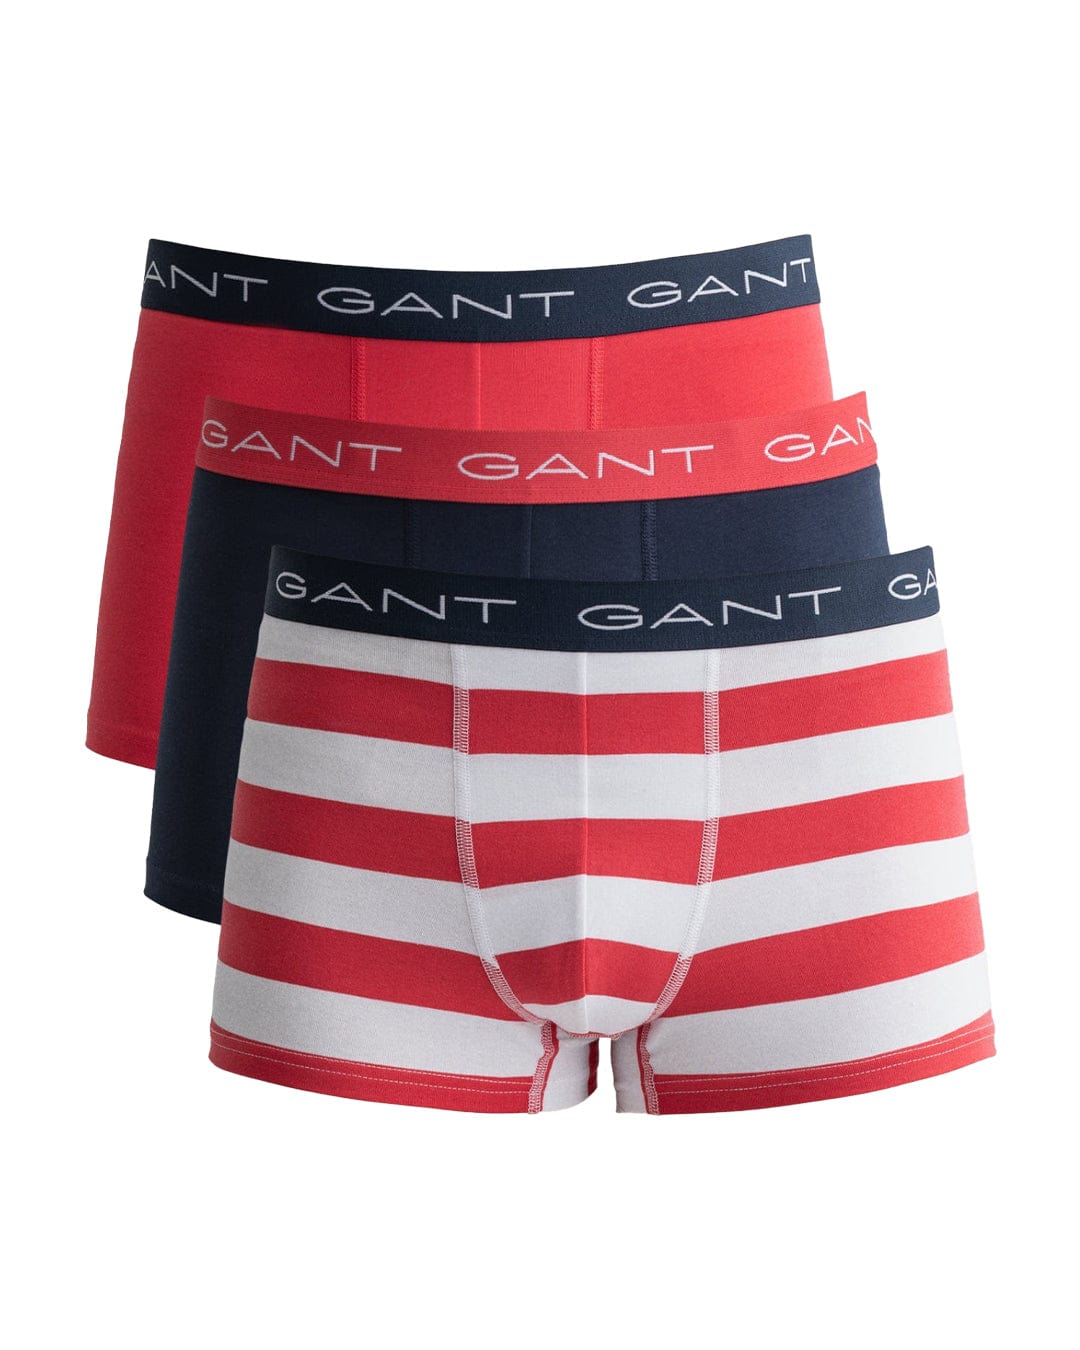 Gant Underwear Gant Red And Navy Rugby Striped Three-Pack Trunks